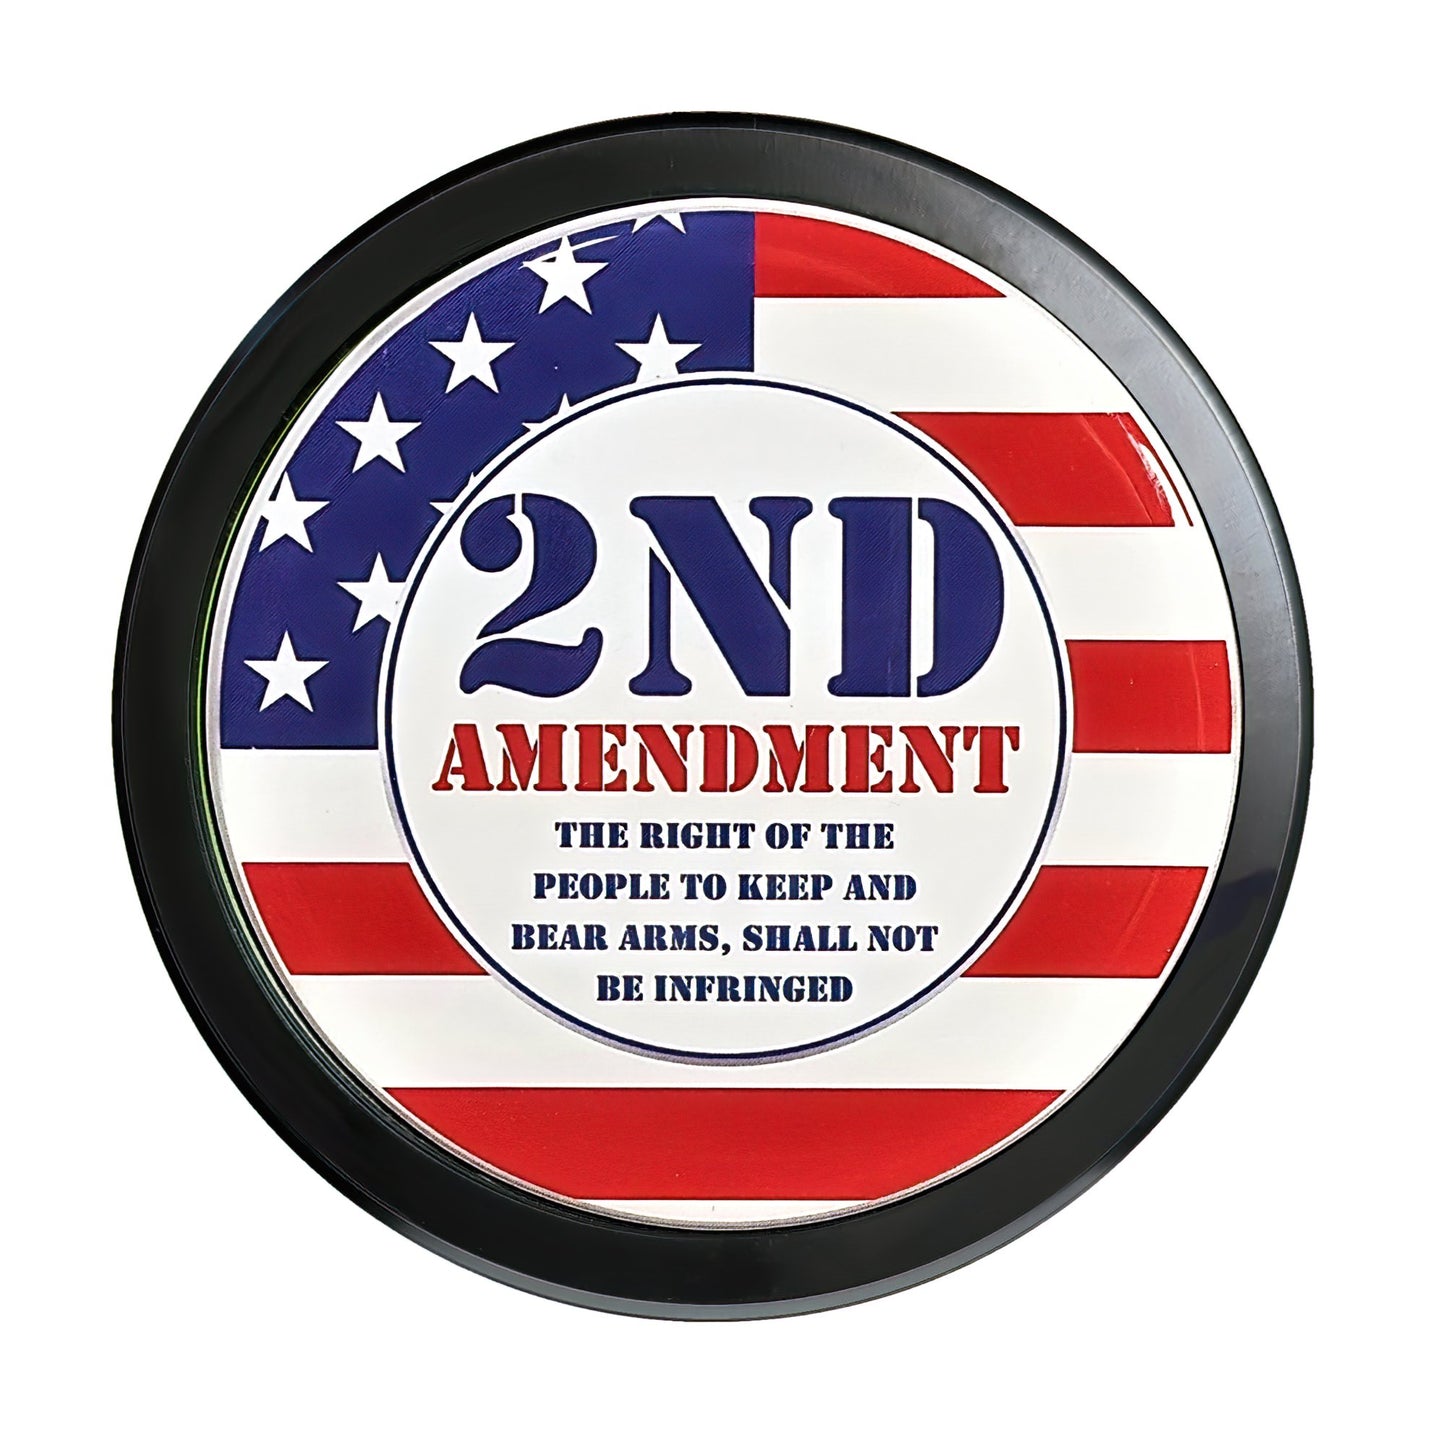 Grille Badge Emblem Fits Jeep Tacoma 4Runner Tundra 2nd Amendment #2A